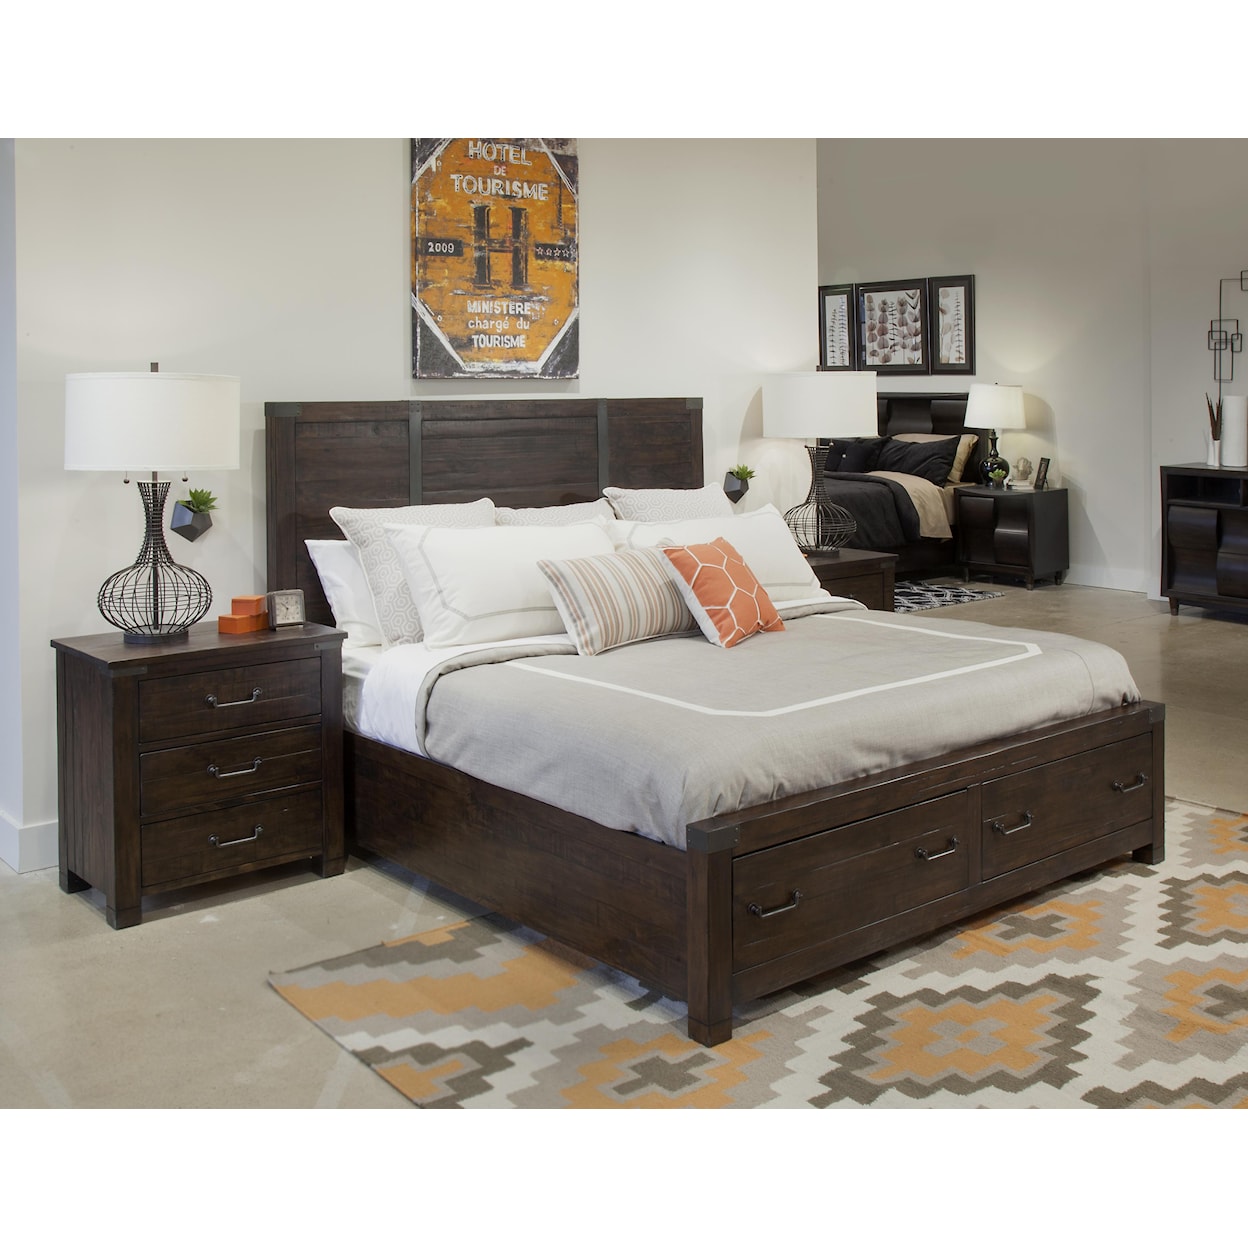 Magnussen Home Pine Hill Bedroom Queen Panel Bed with Storage Footboard